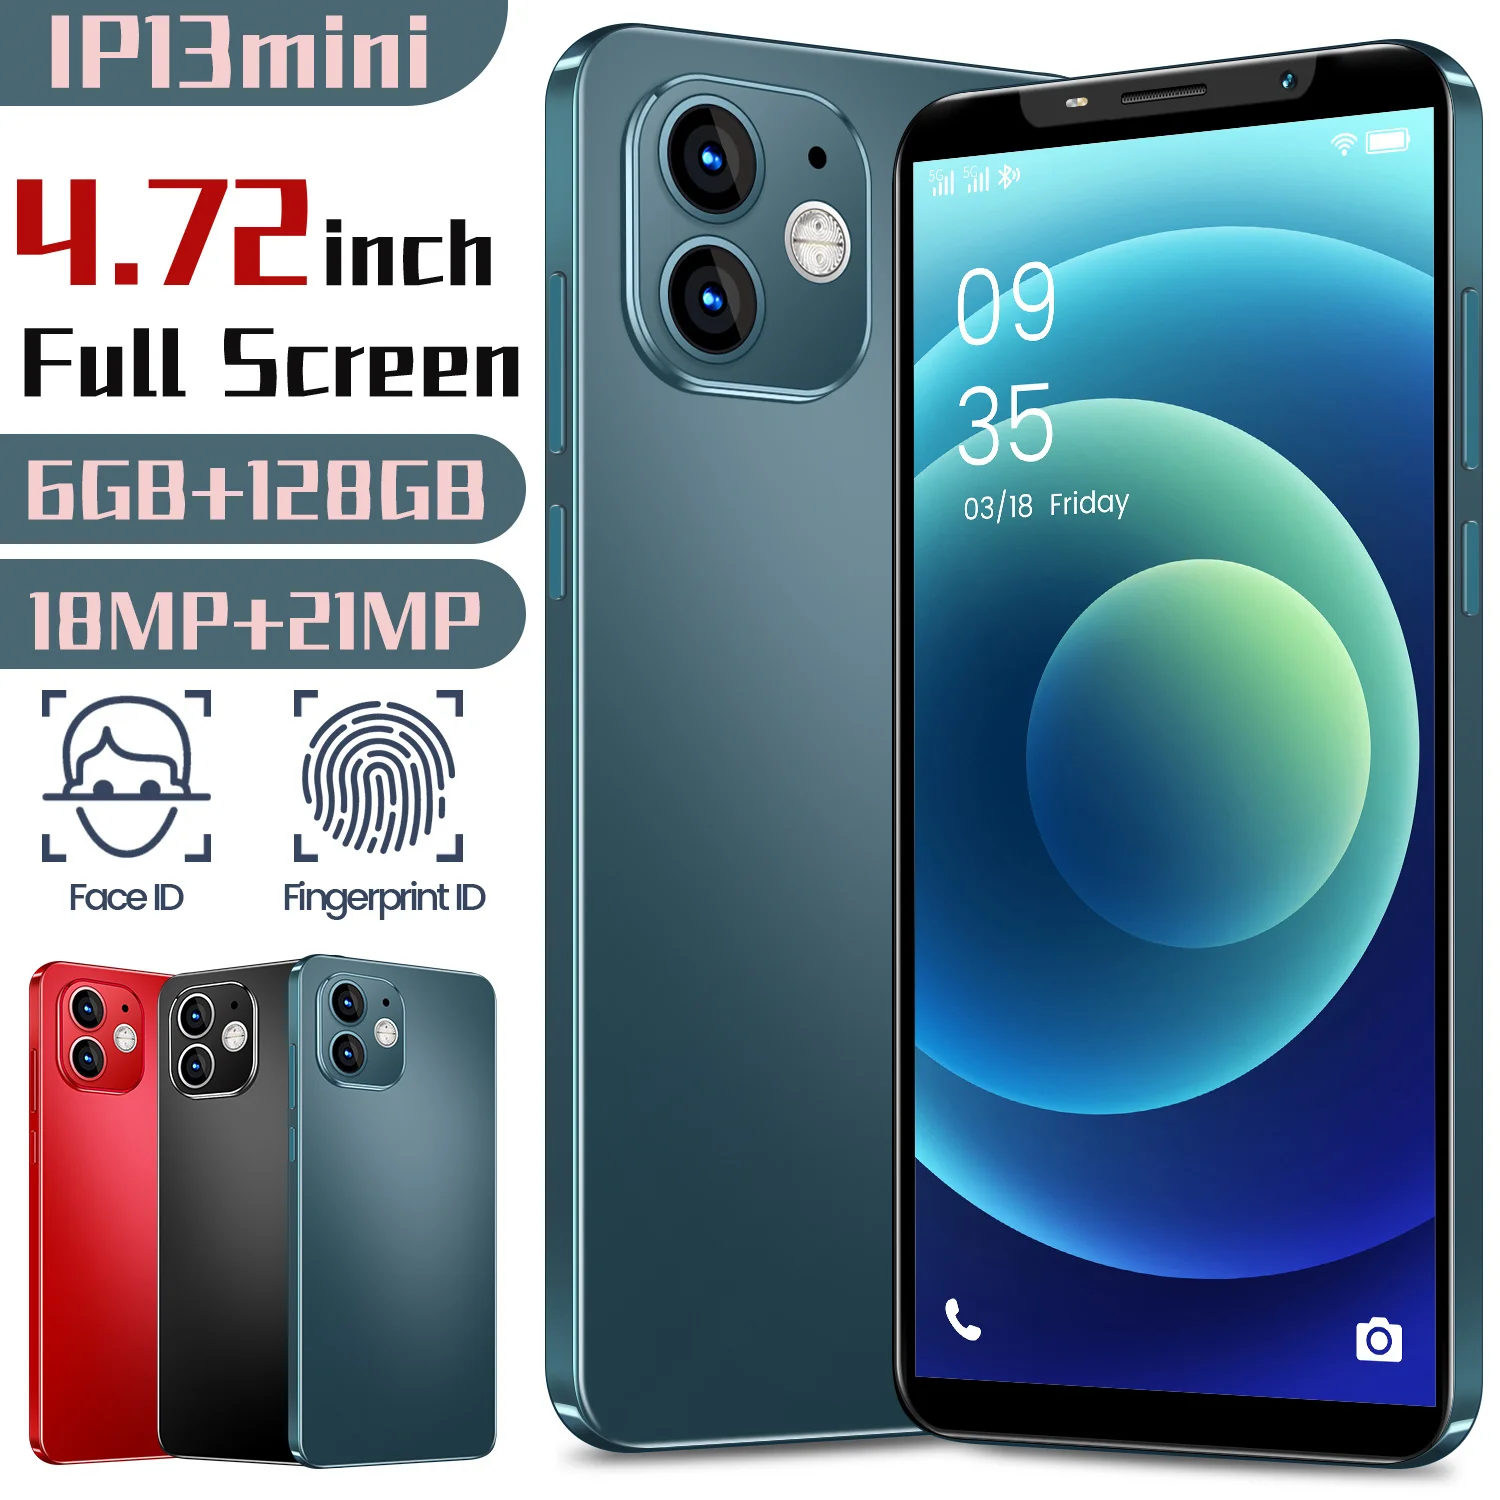 global version ip13mini 4 72 inch 4300mah battery face wake fingerprint unlock phone 6gb128gb mobile phone audio android phone free global shipping